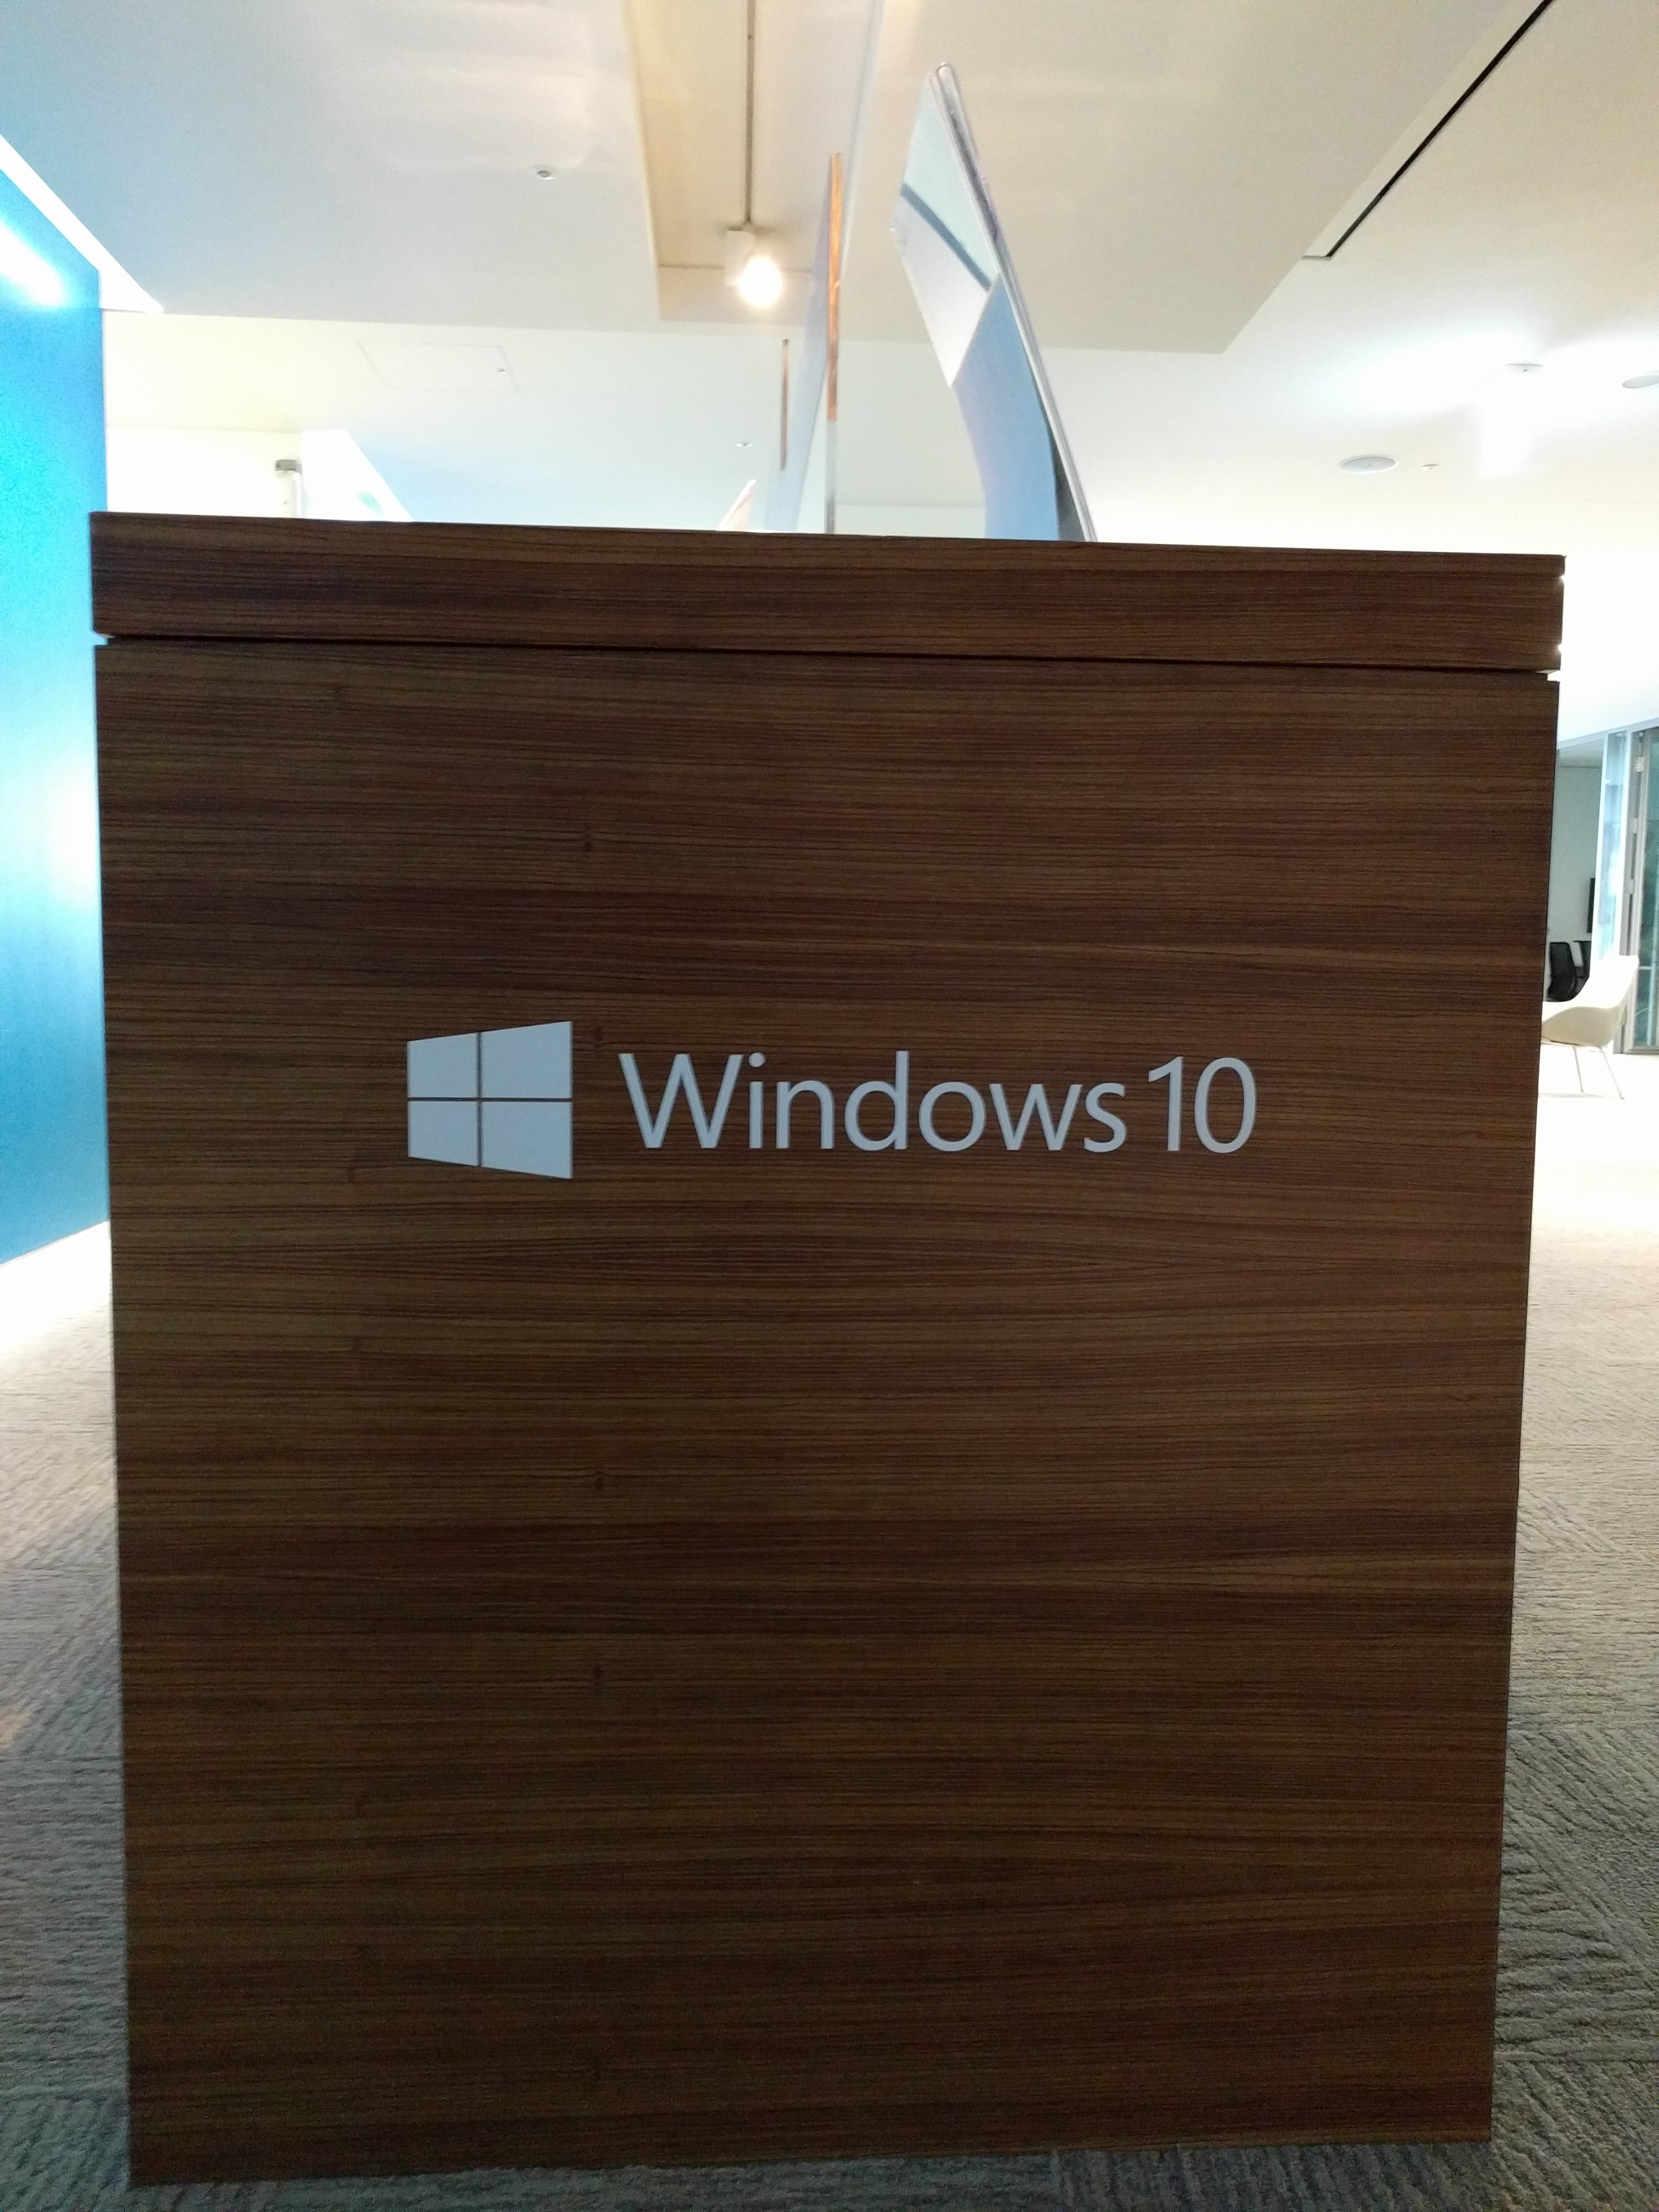 Windows 10 Creators Update Display Corner at Level 11